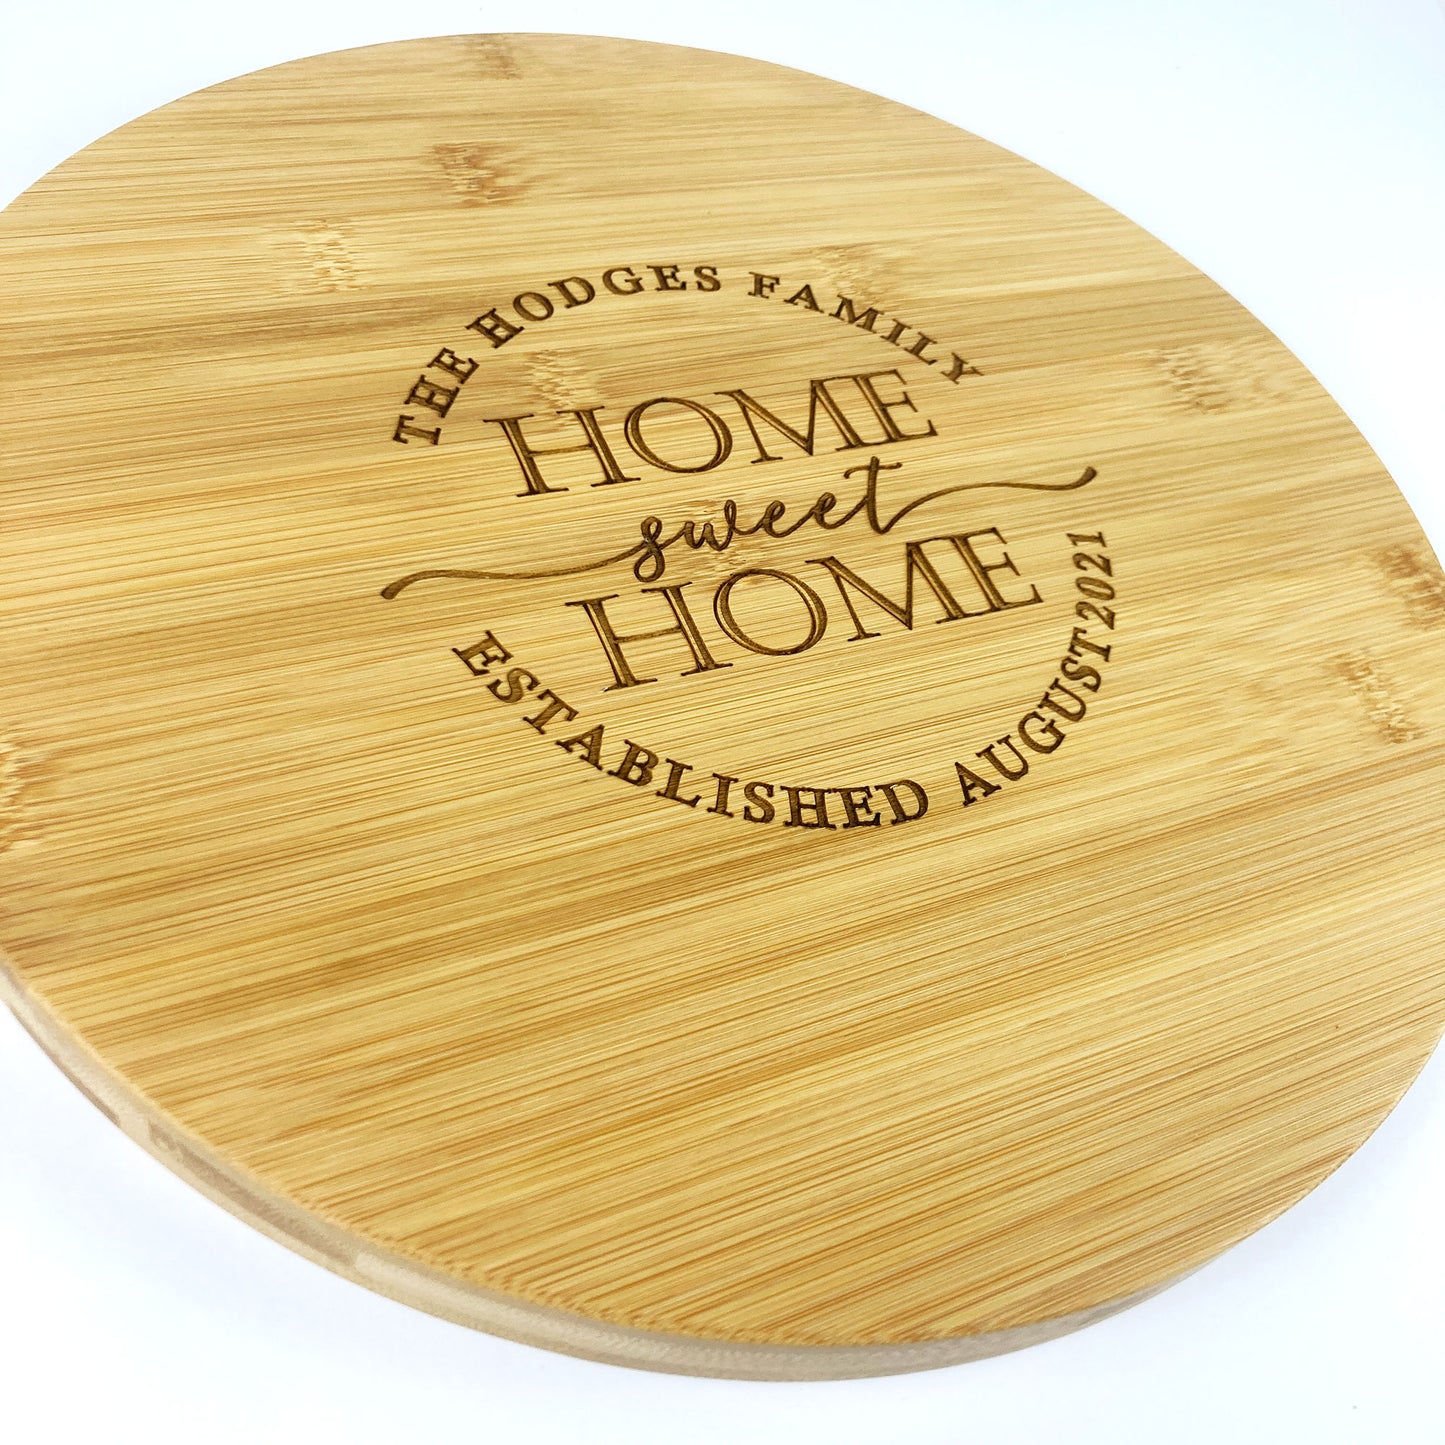 Round Wooden Chopping Board Home Sweet Home Custom Names Year